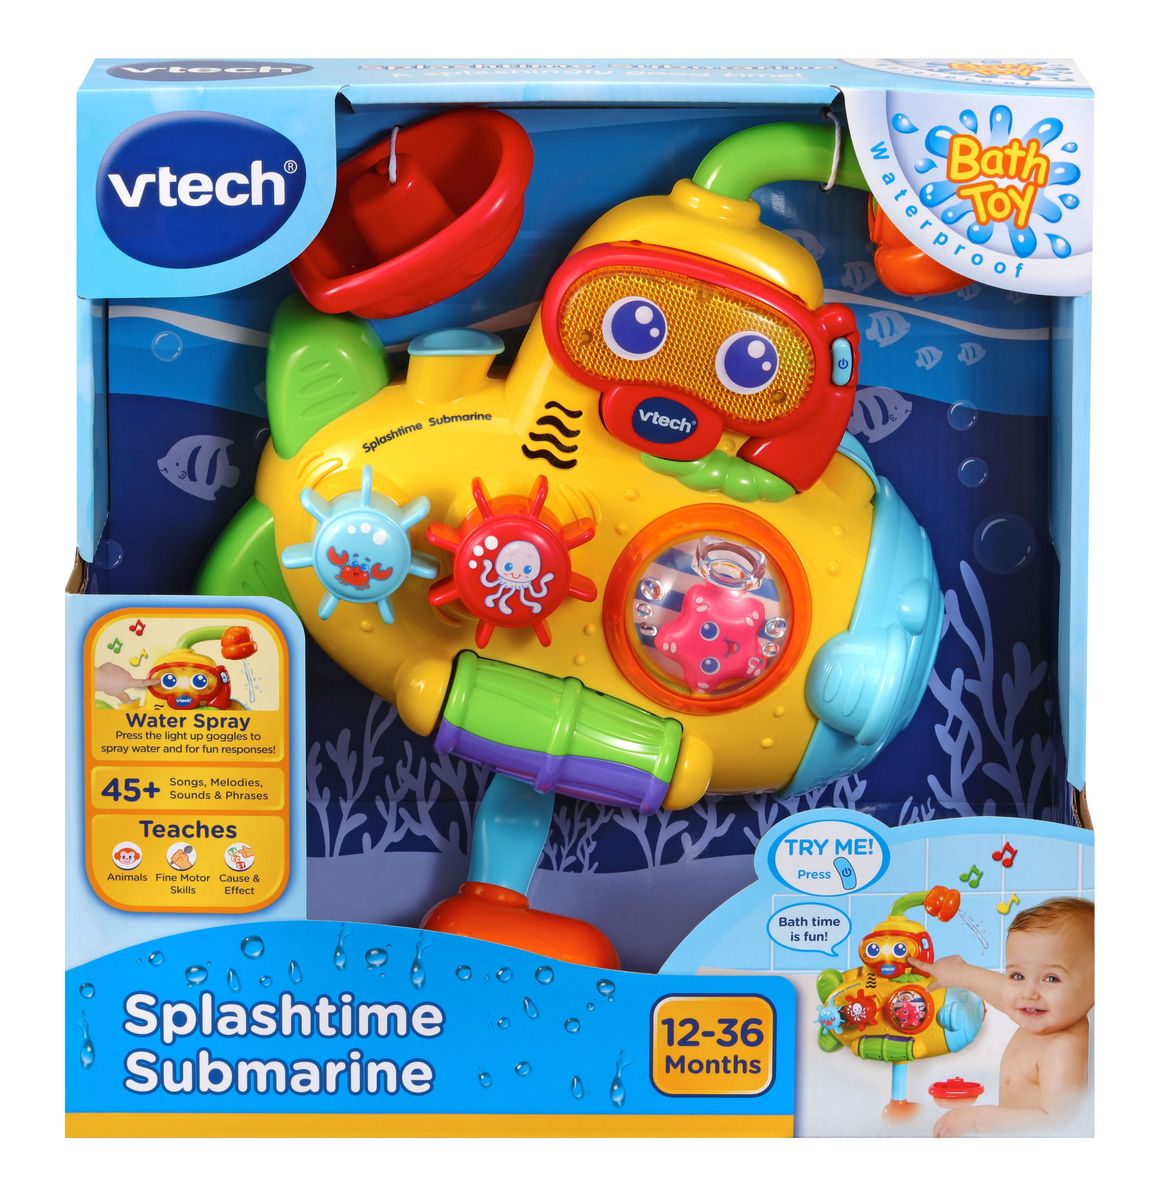 Splashtime Submarine